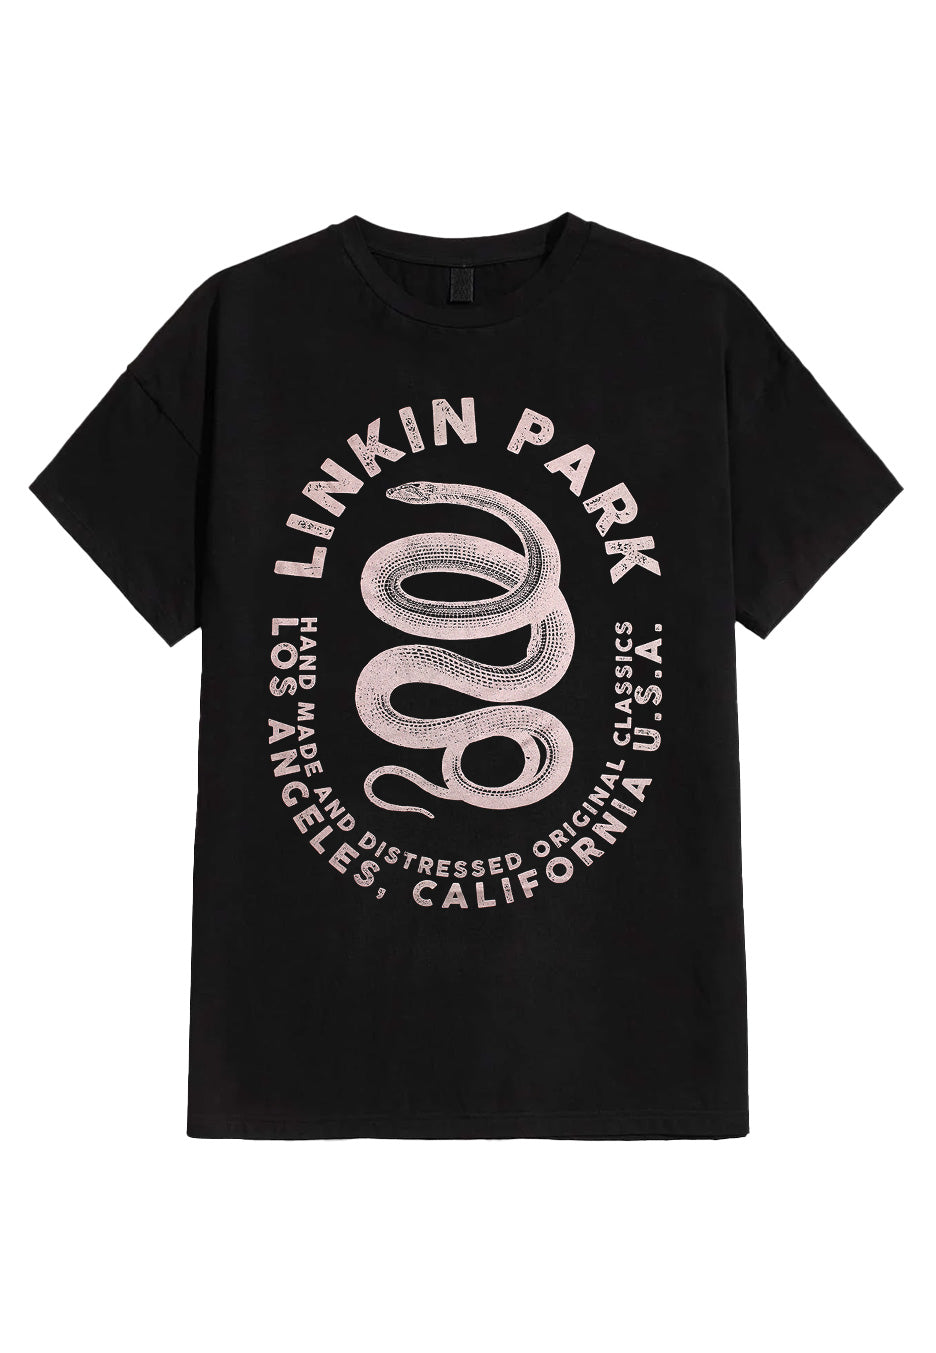 Linkin Park - Snakey Text - T-Shirt